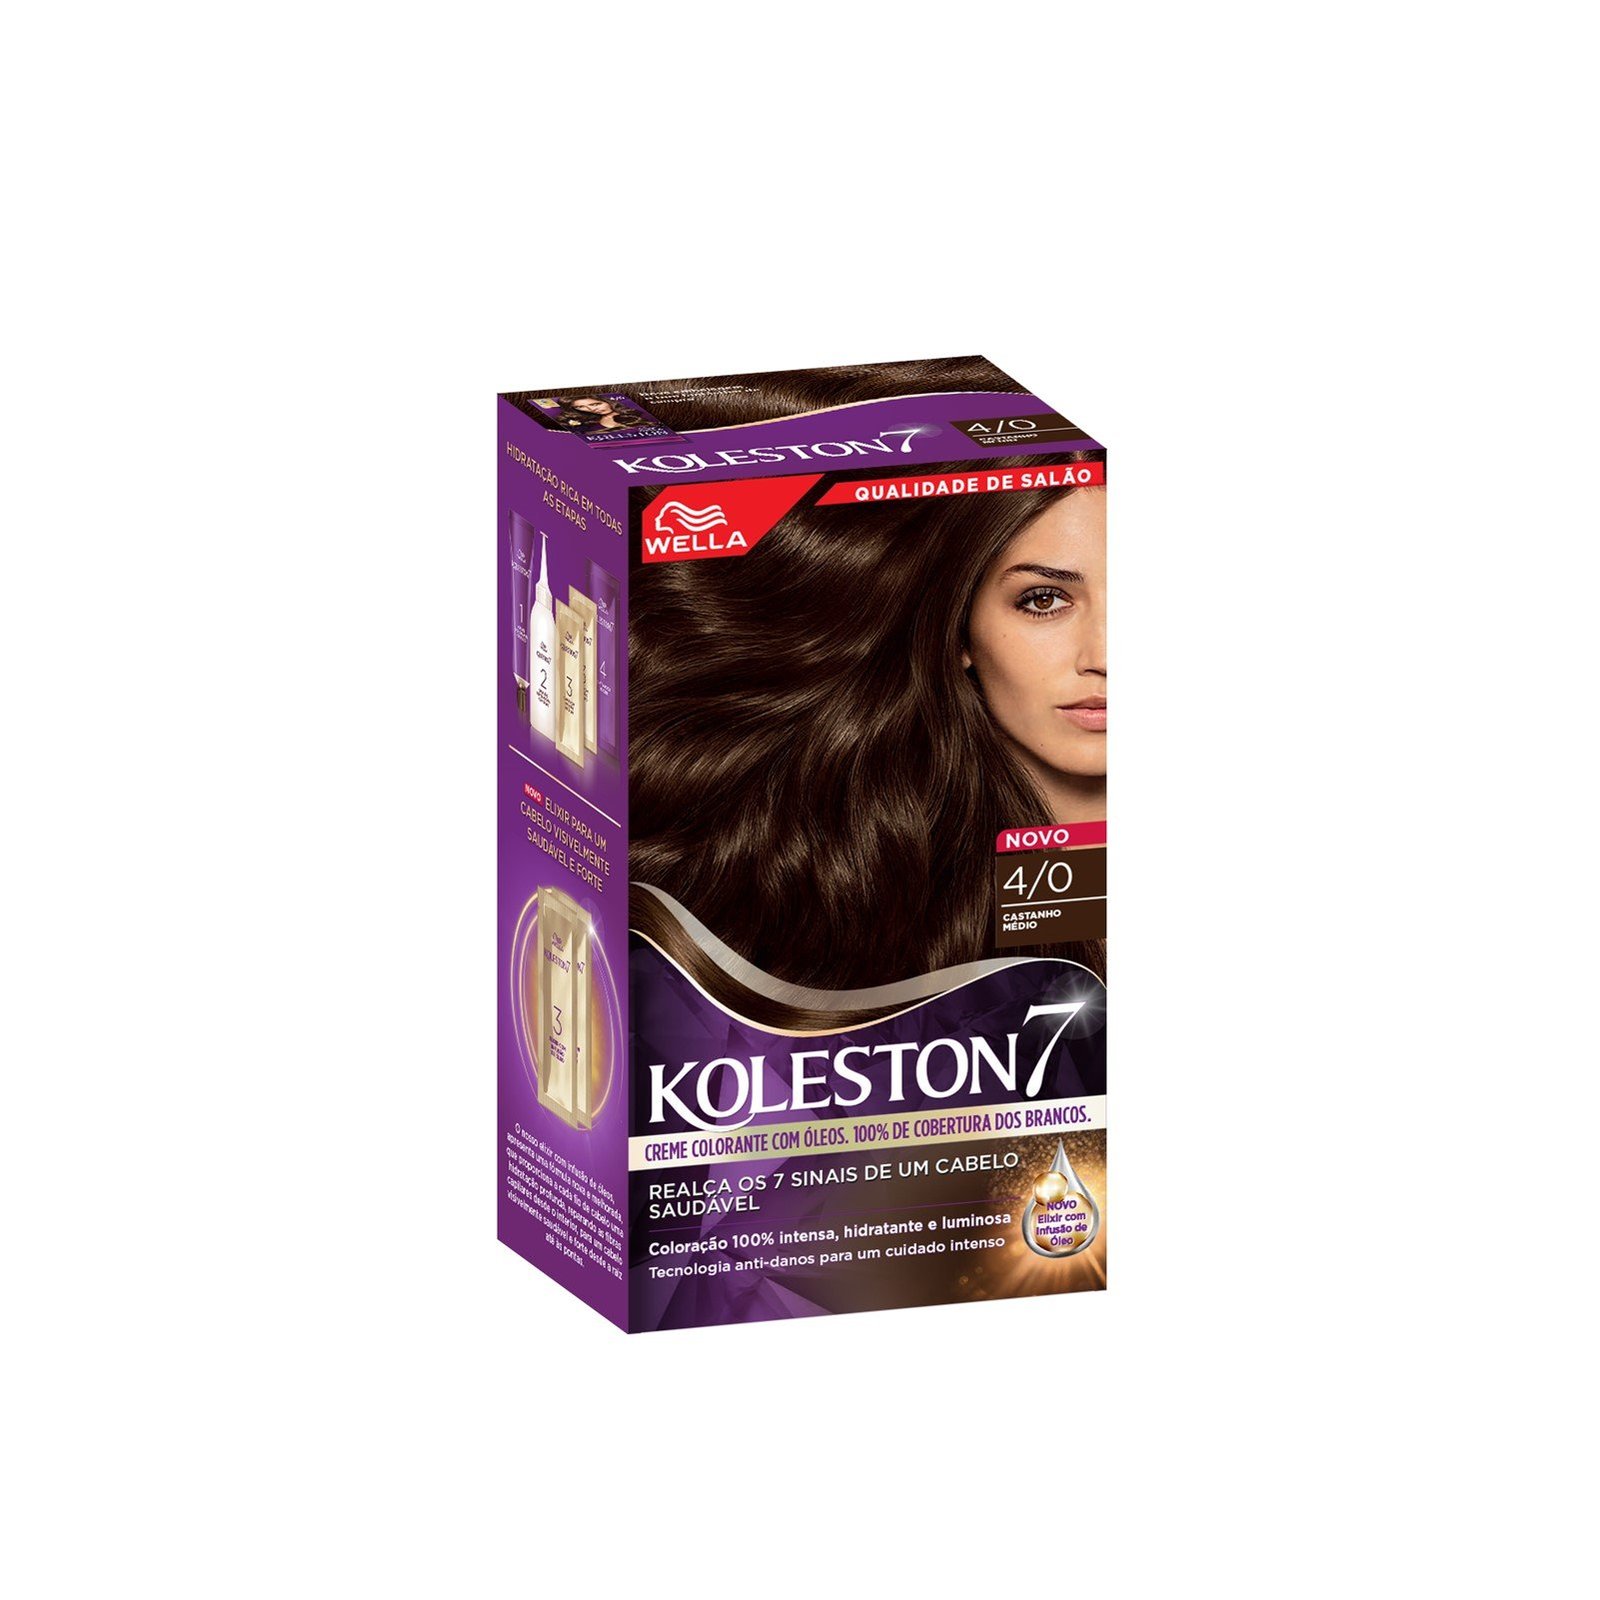 Wella Koleston 4/0 Medium Brown Permanent Hair Color